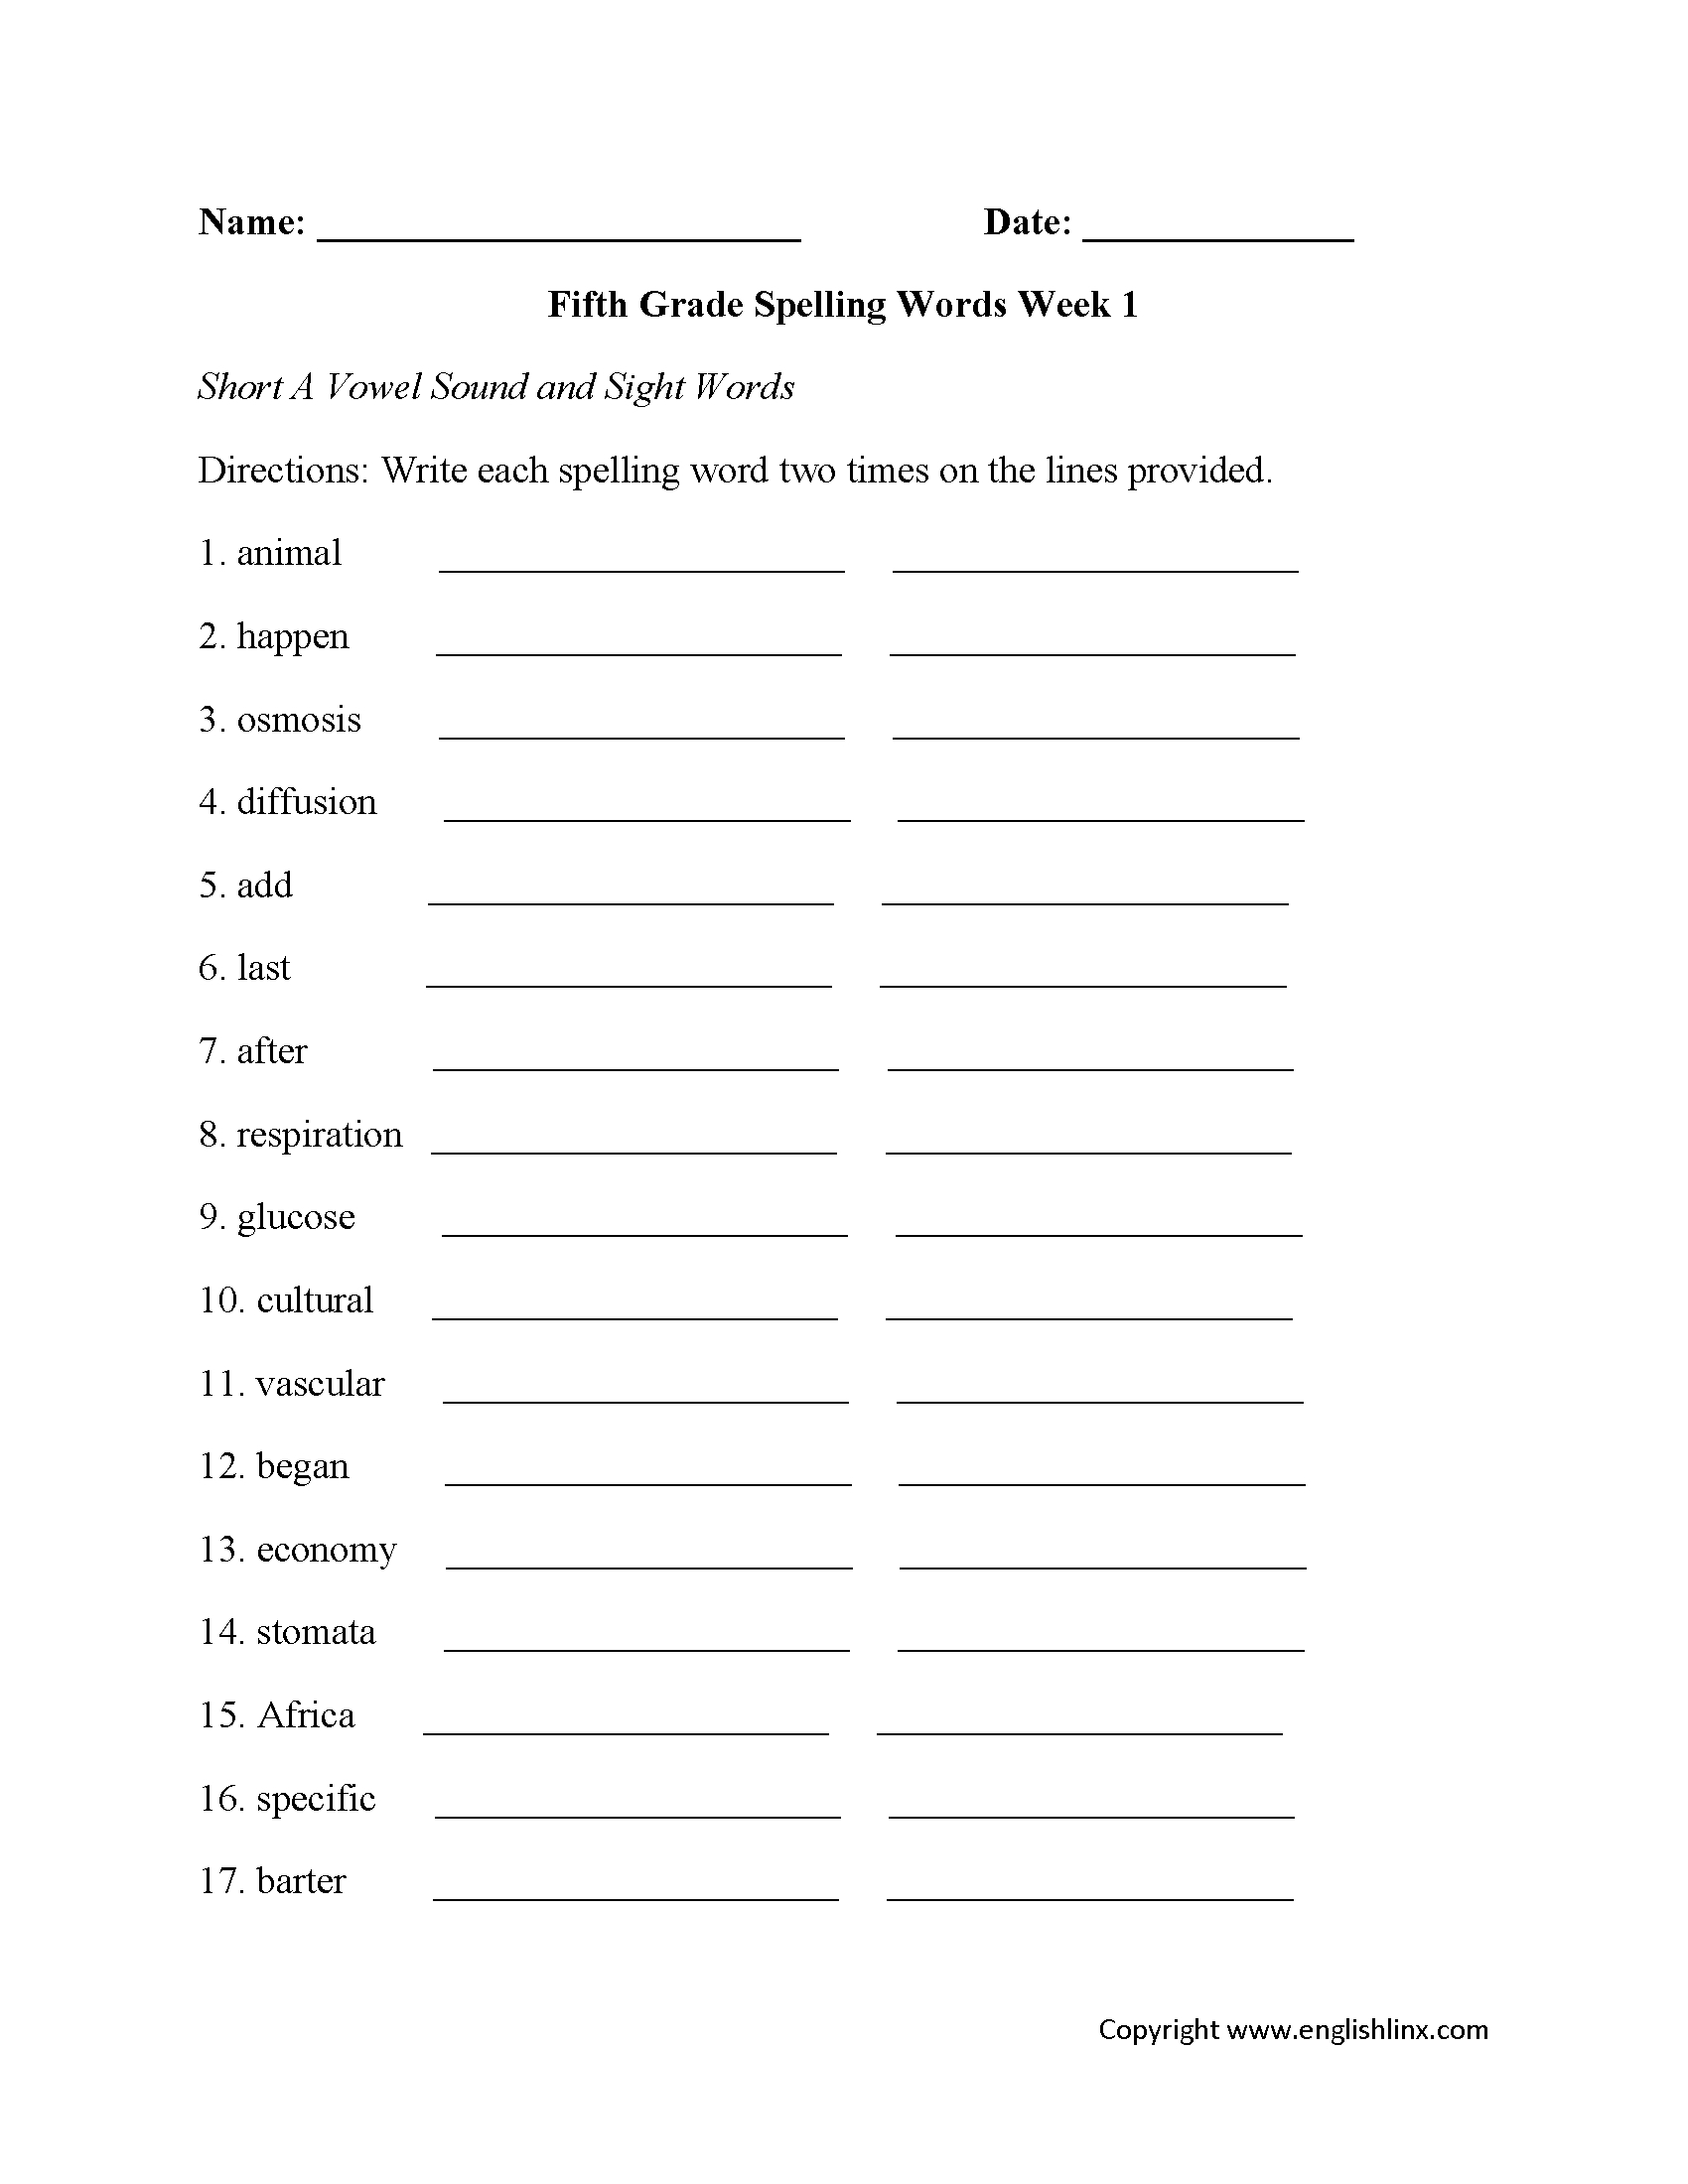 Spelling Worksheets | Fifth Grade Spelling Worksheets - Free | Free Printable Spelling Worksheets